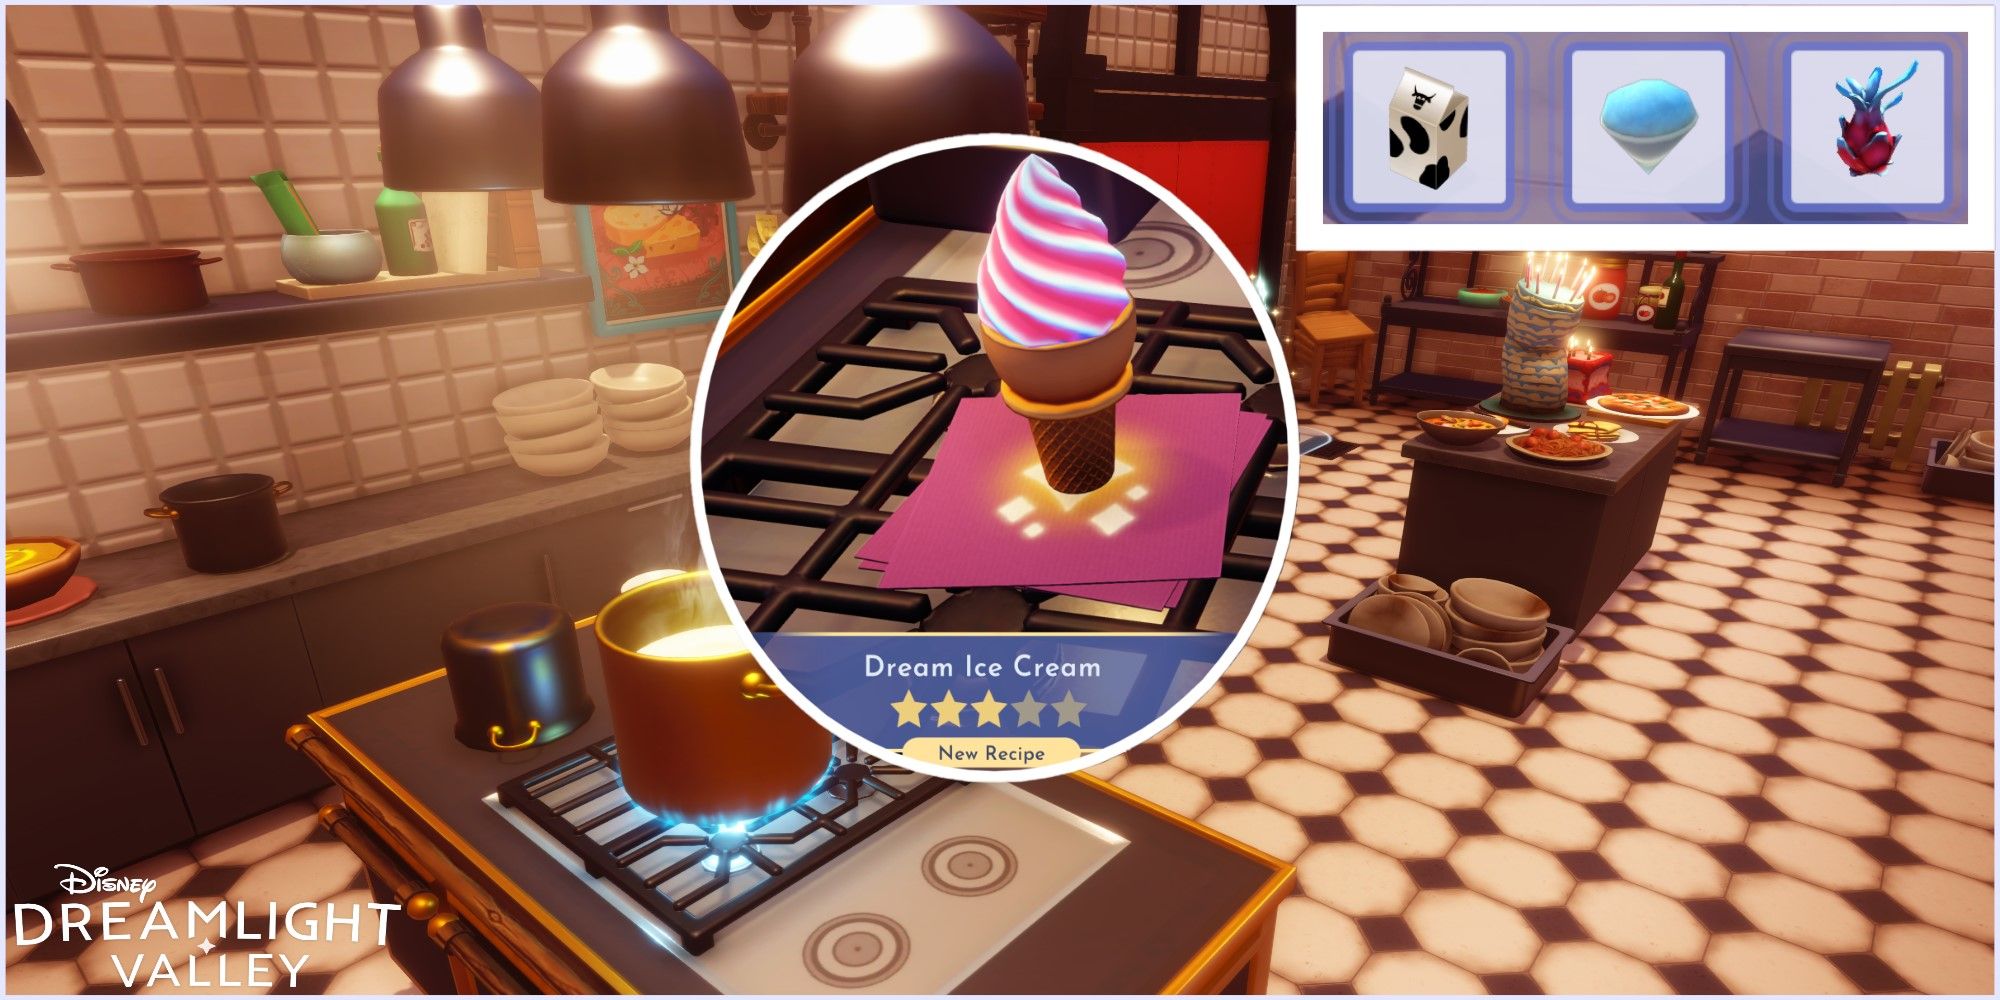 Disney Dreamlight Valley Split Image Ratatouille Realm With Dream Ice Cream And Recipe